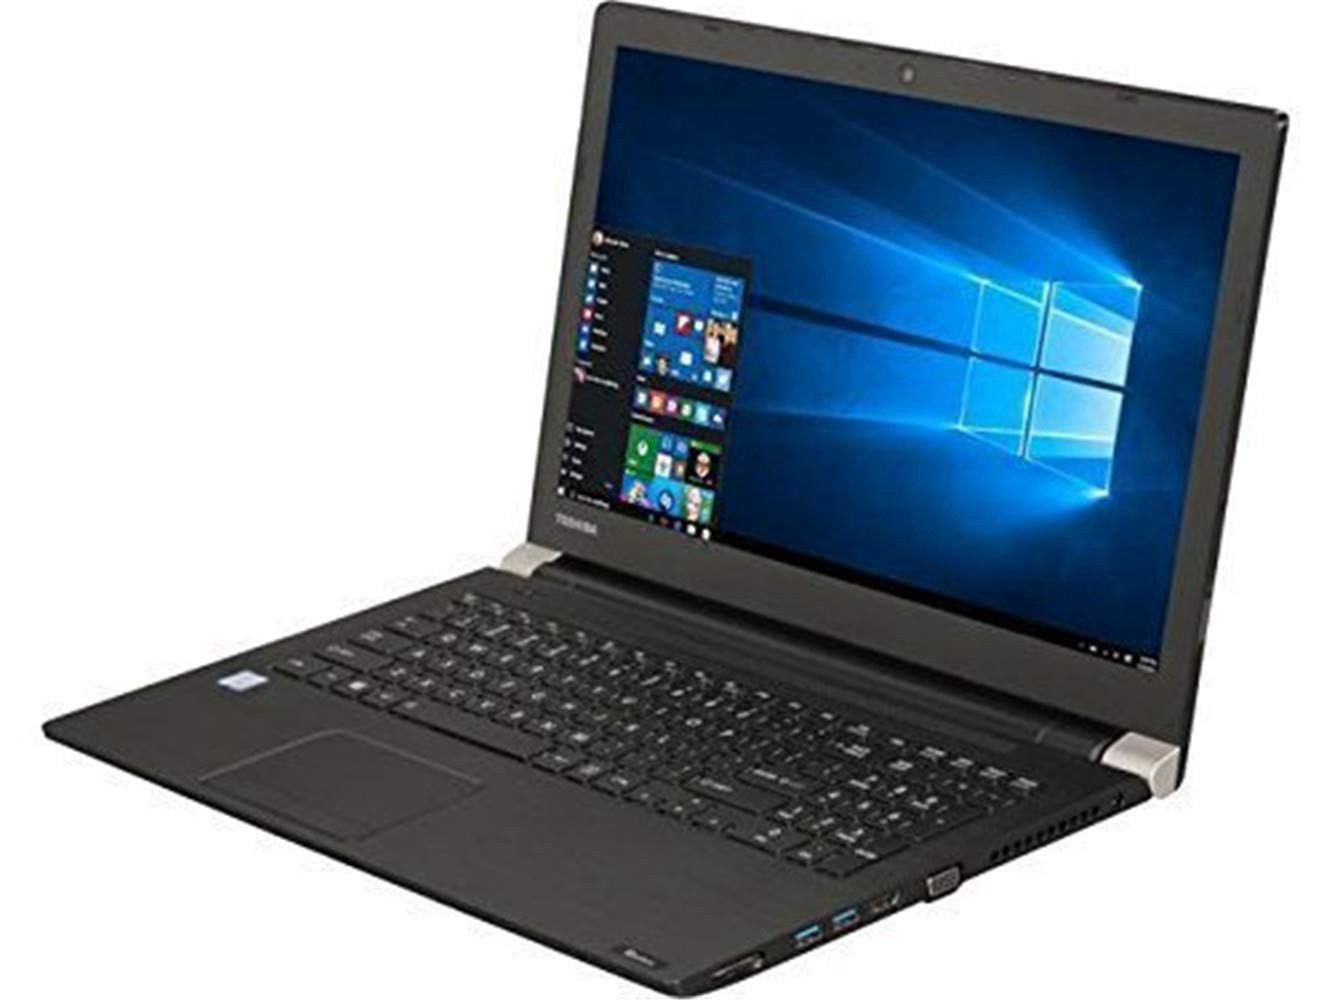 2019 TOSHIBA Tecra A50-E 15.6" Business Laptop Computer, 8th Gen Quad-Core i7-8550U up to 4.0GHz, 12GB DDR4 RAM, 256GB SSD, DVDRW, 802.11ac WiFi, Bluetooth, HDMI, USB 3.0, Windows 10 Professional